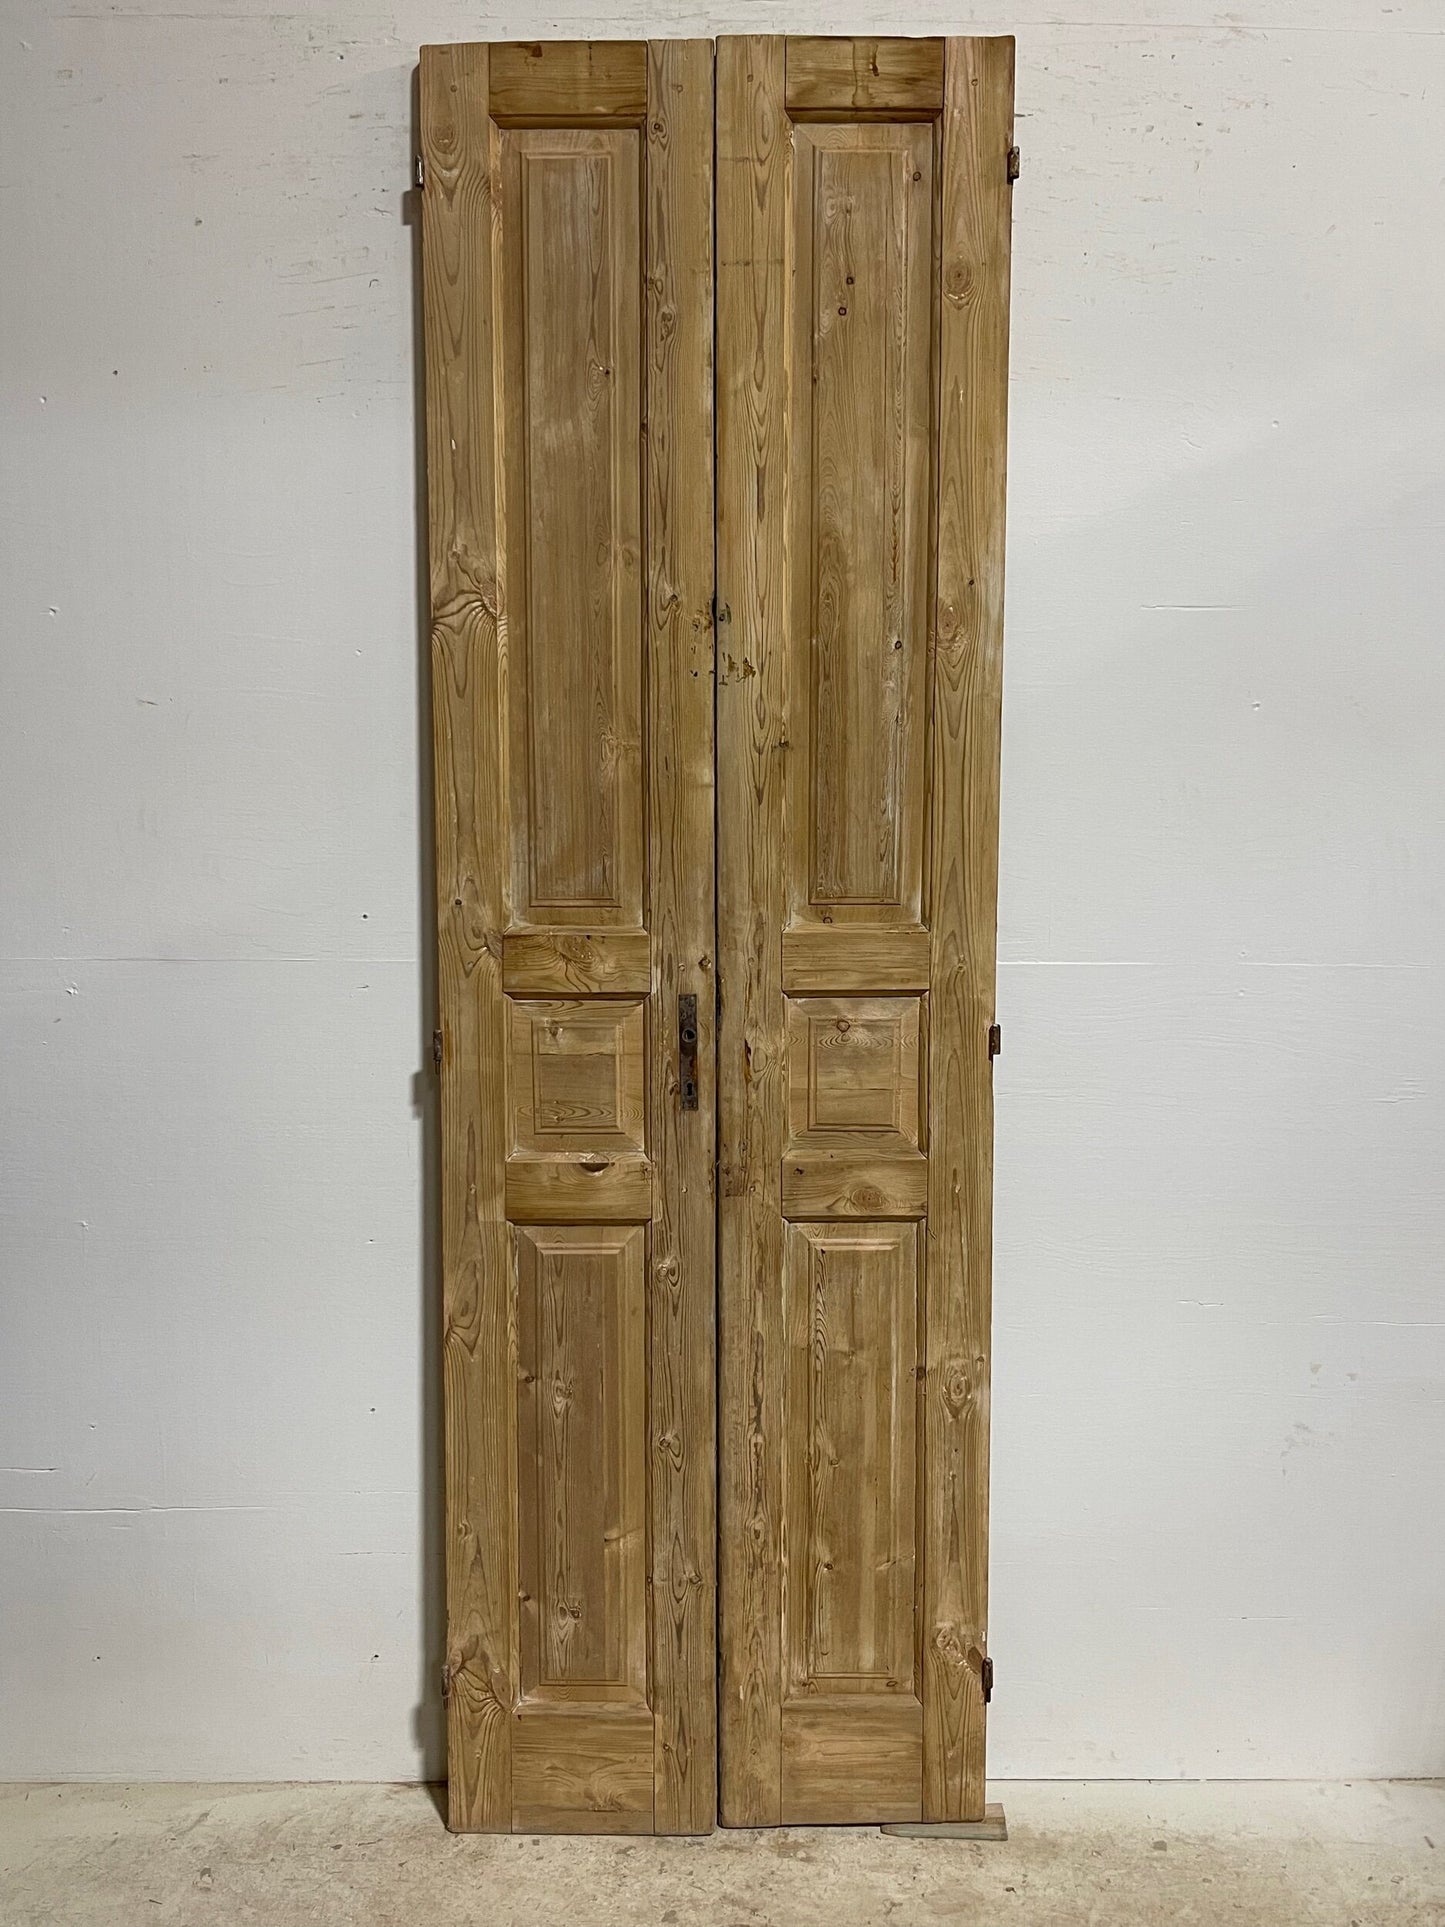 Antique French doors (94.25x29.5) H0208s